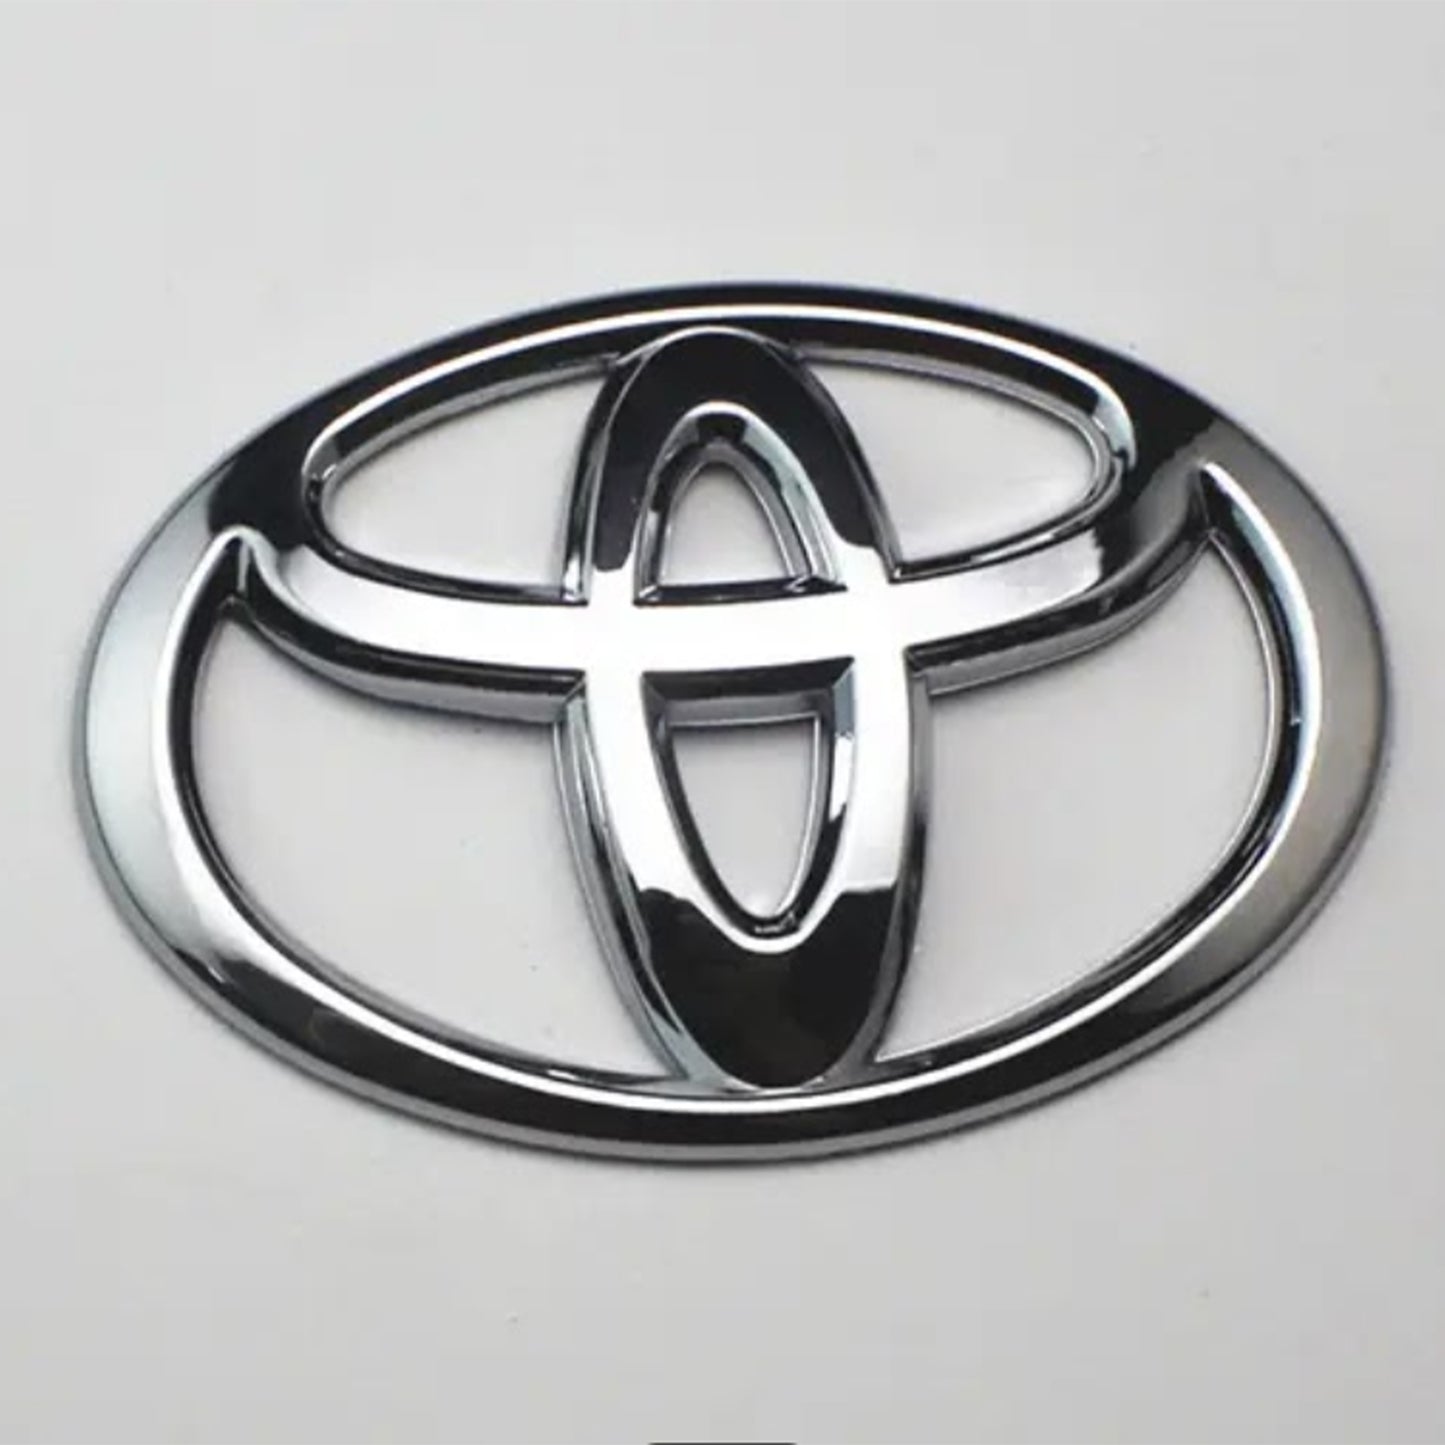 2012-2015 Toyota Tacoma Front Grille Emblem Chrome - Oem New! 17.5*12cm